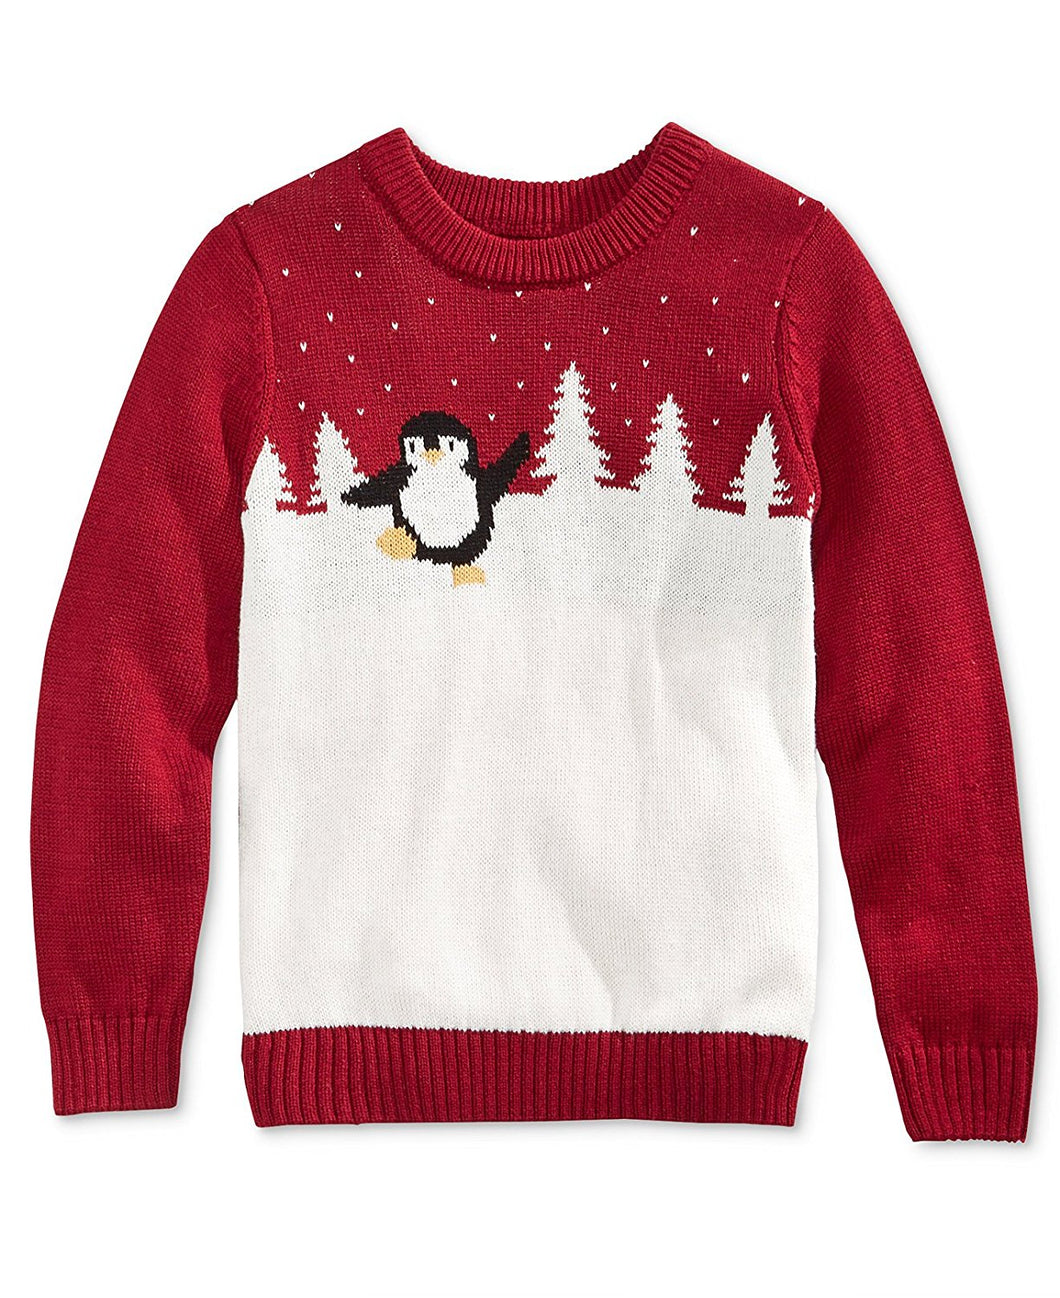 Celebrate Shop Holiday Arcade Boys or Girls Penguin Sweater